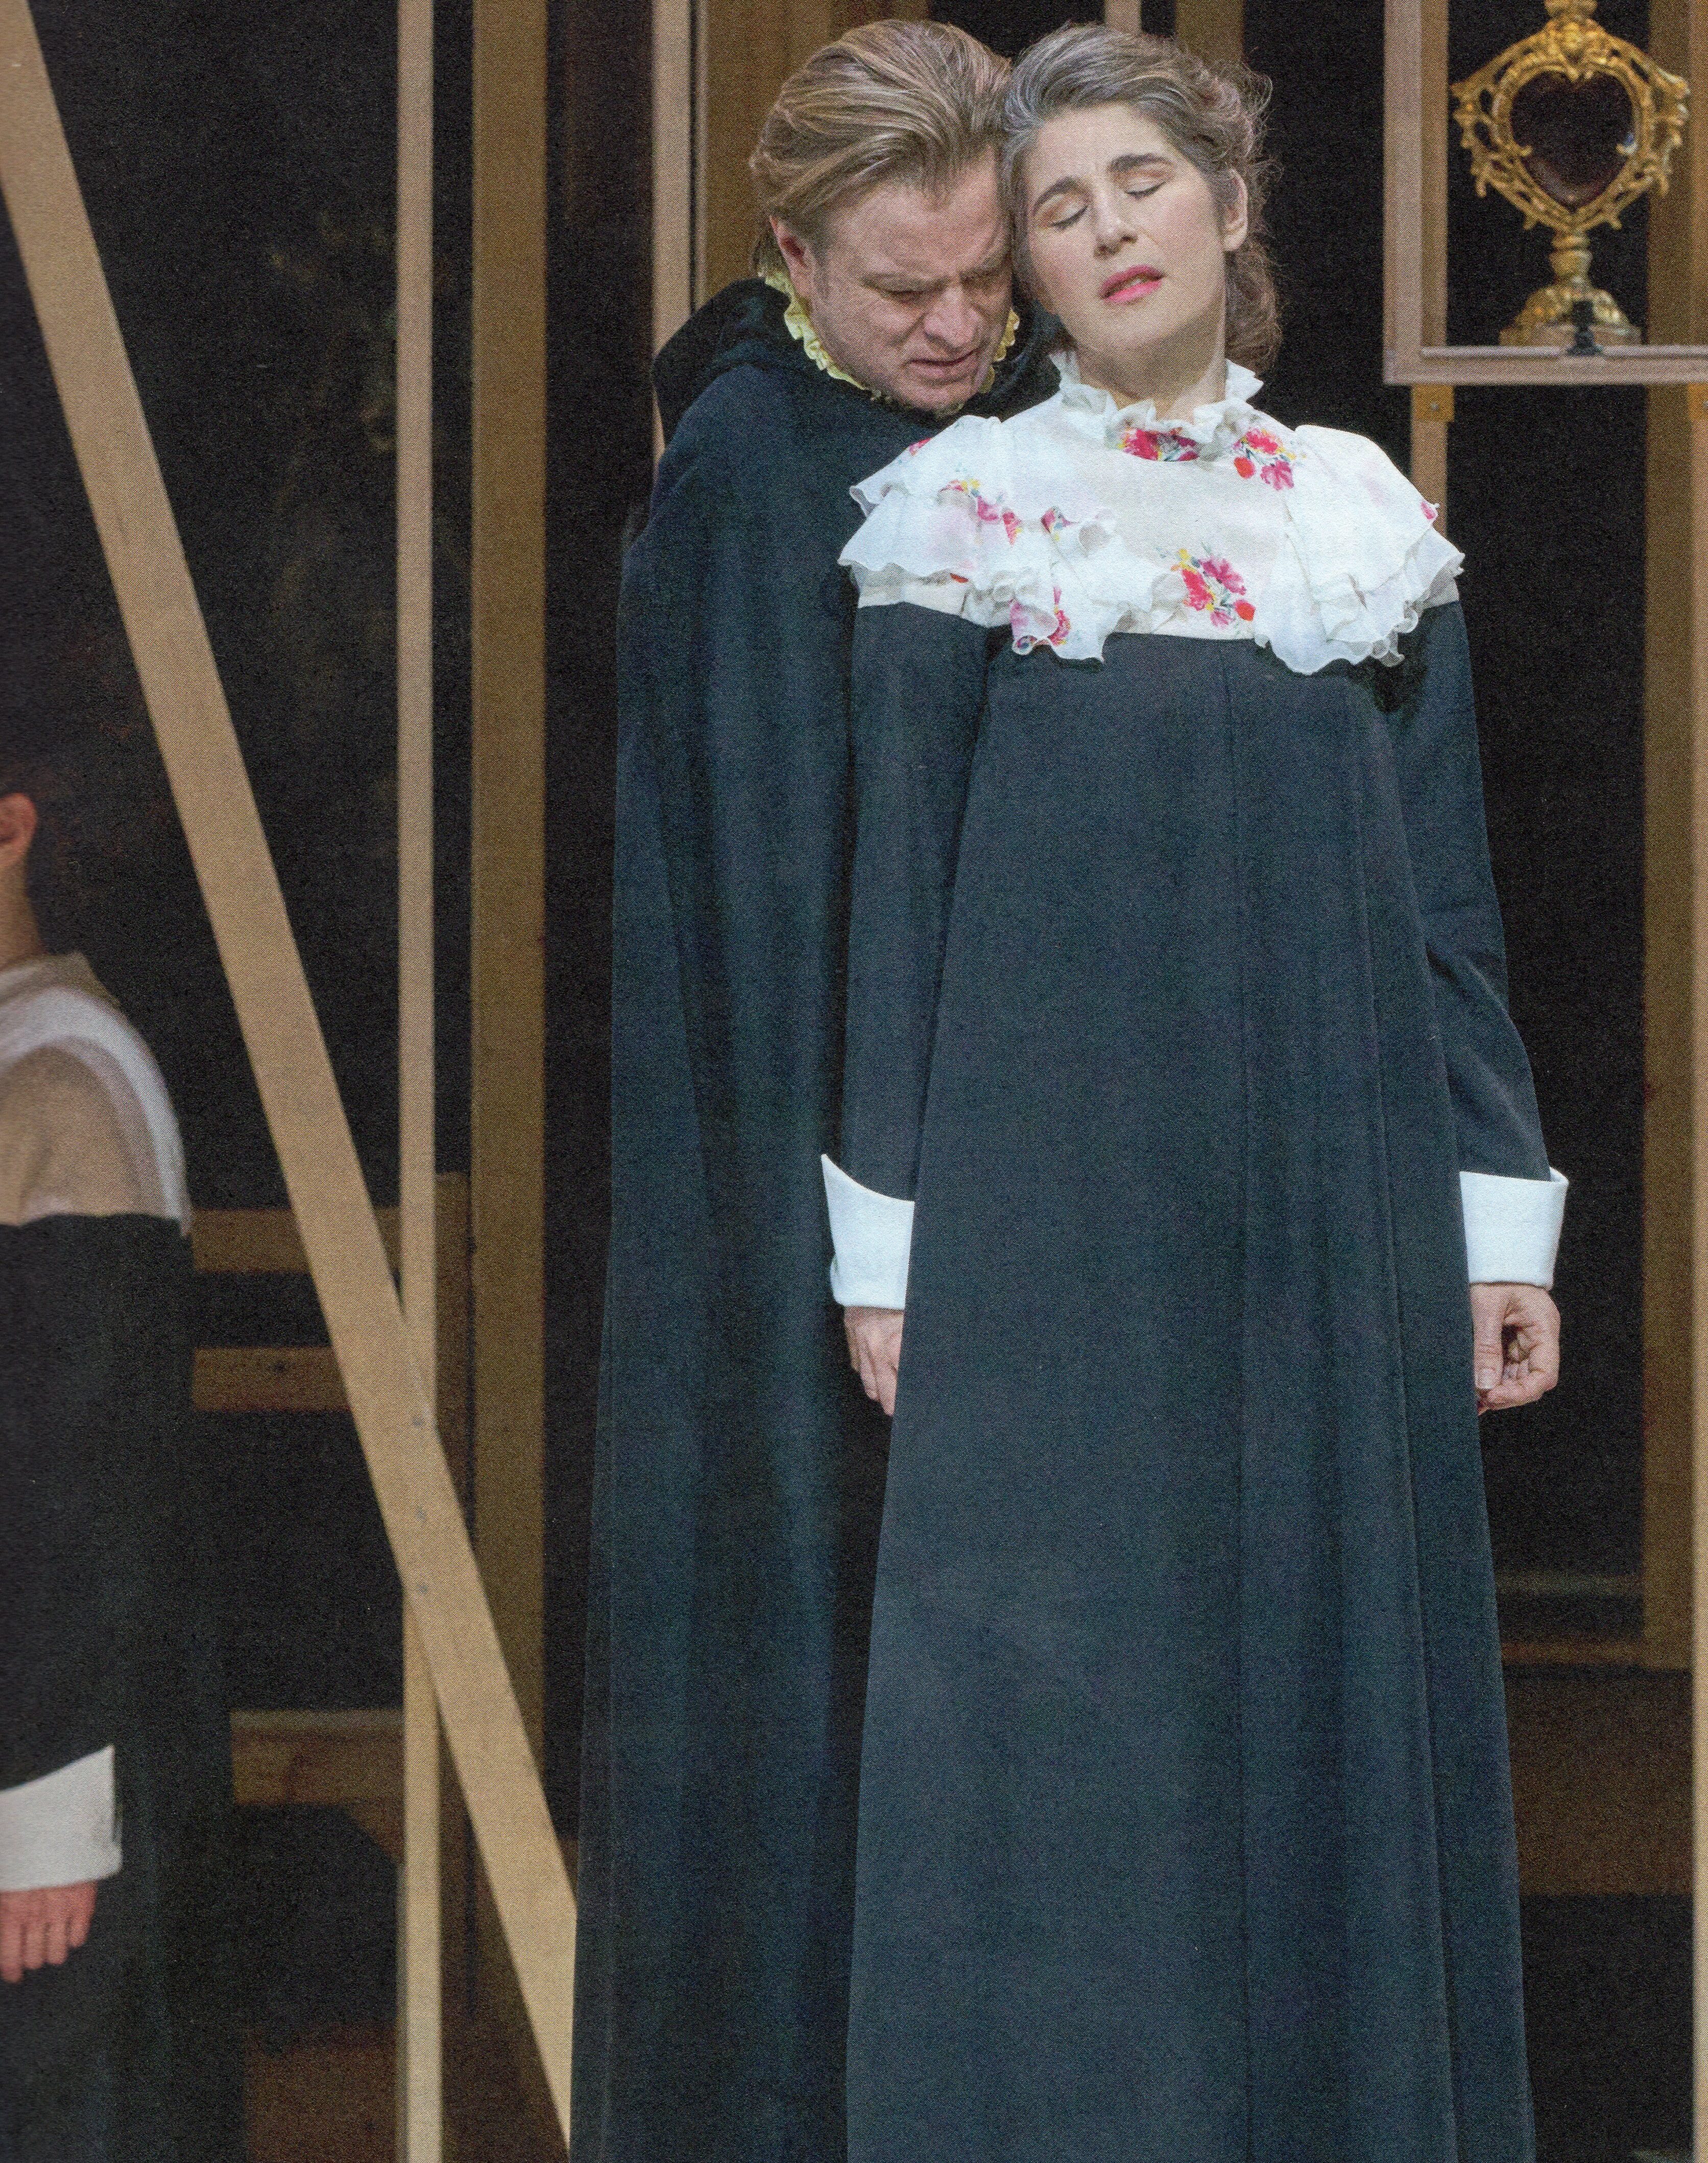 Bernard Richter as Chevalier, Nicole Car as Blanche © Michael Pöhn/ Wiener Staatsoper